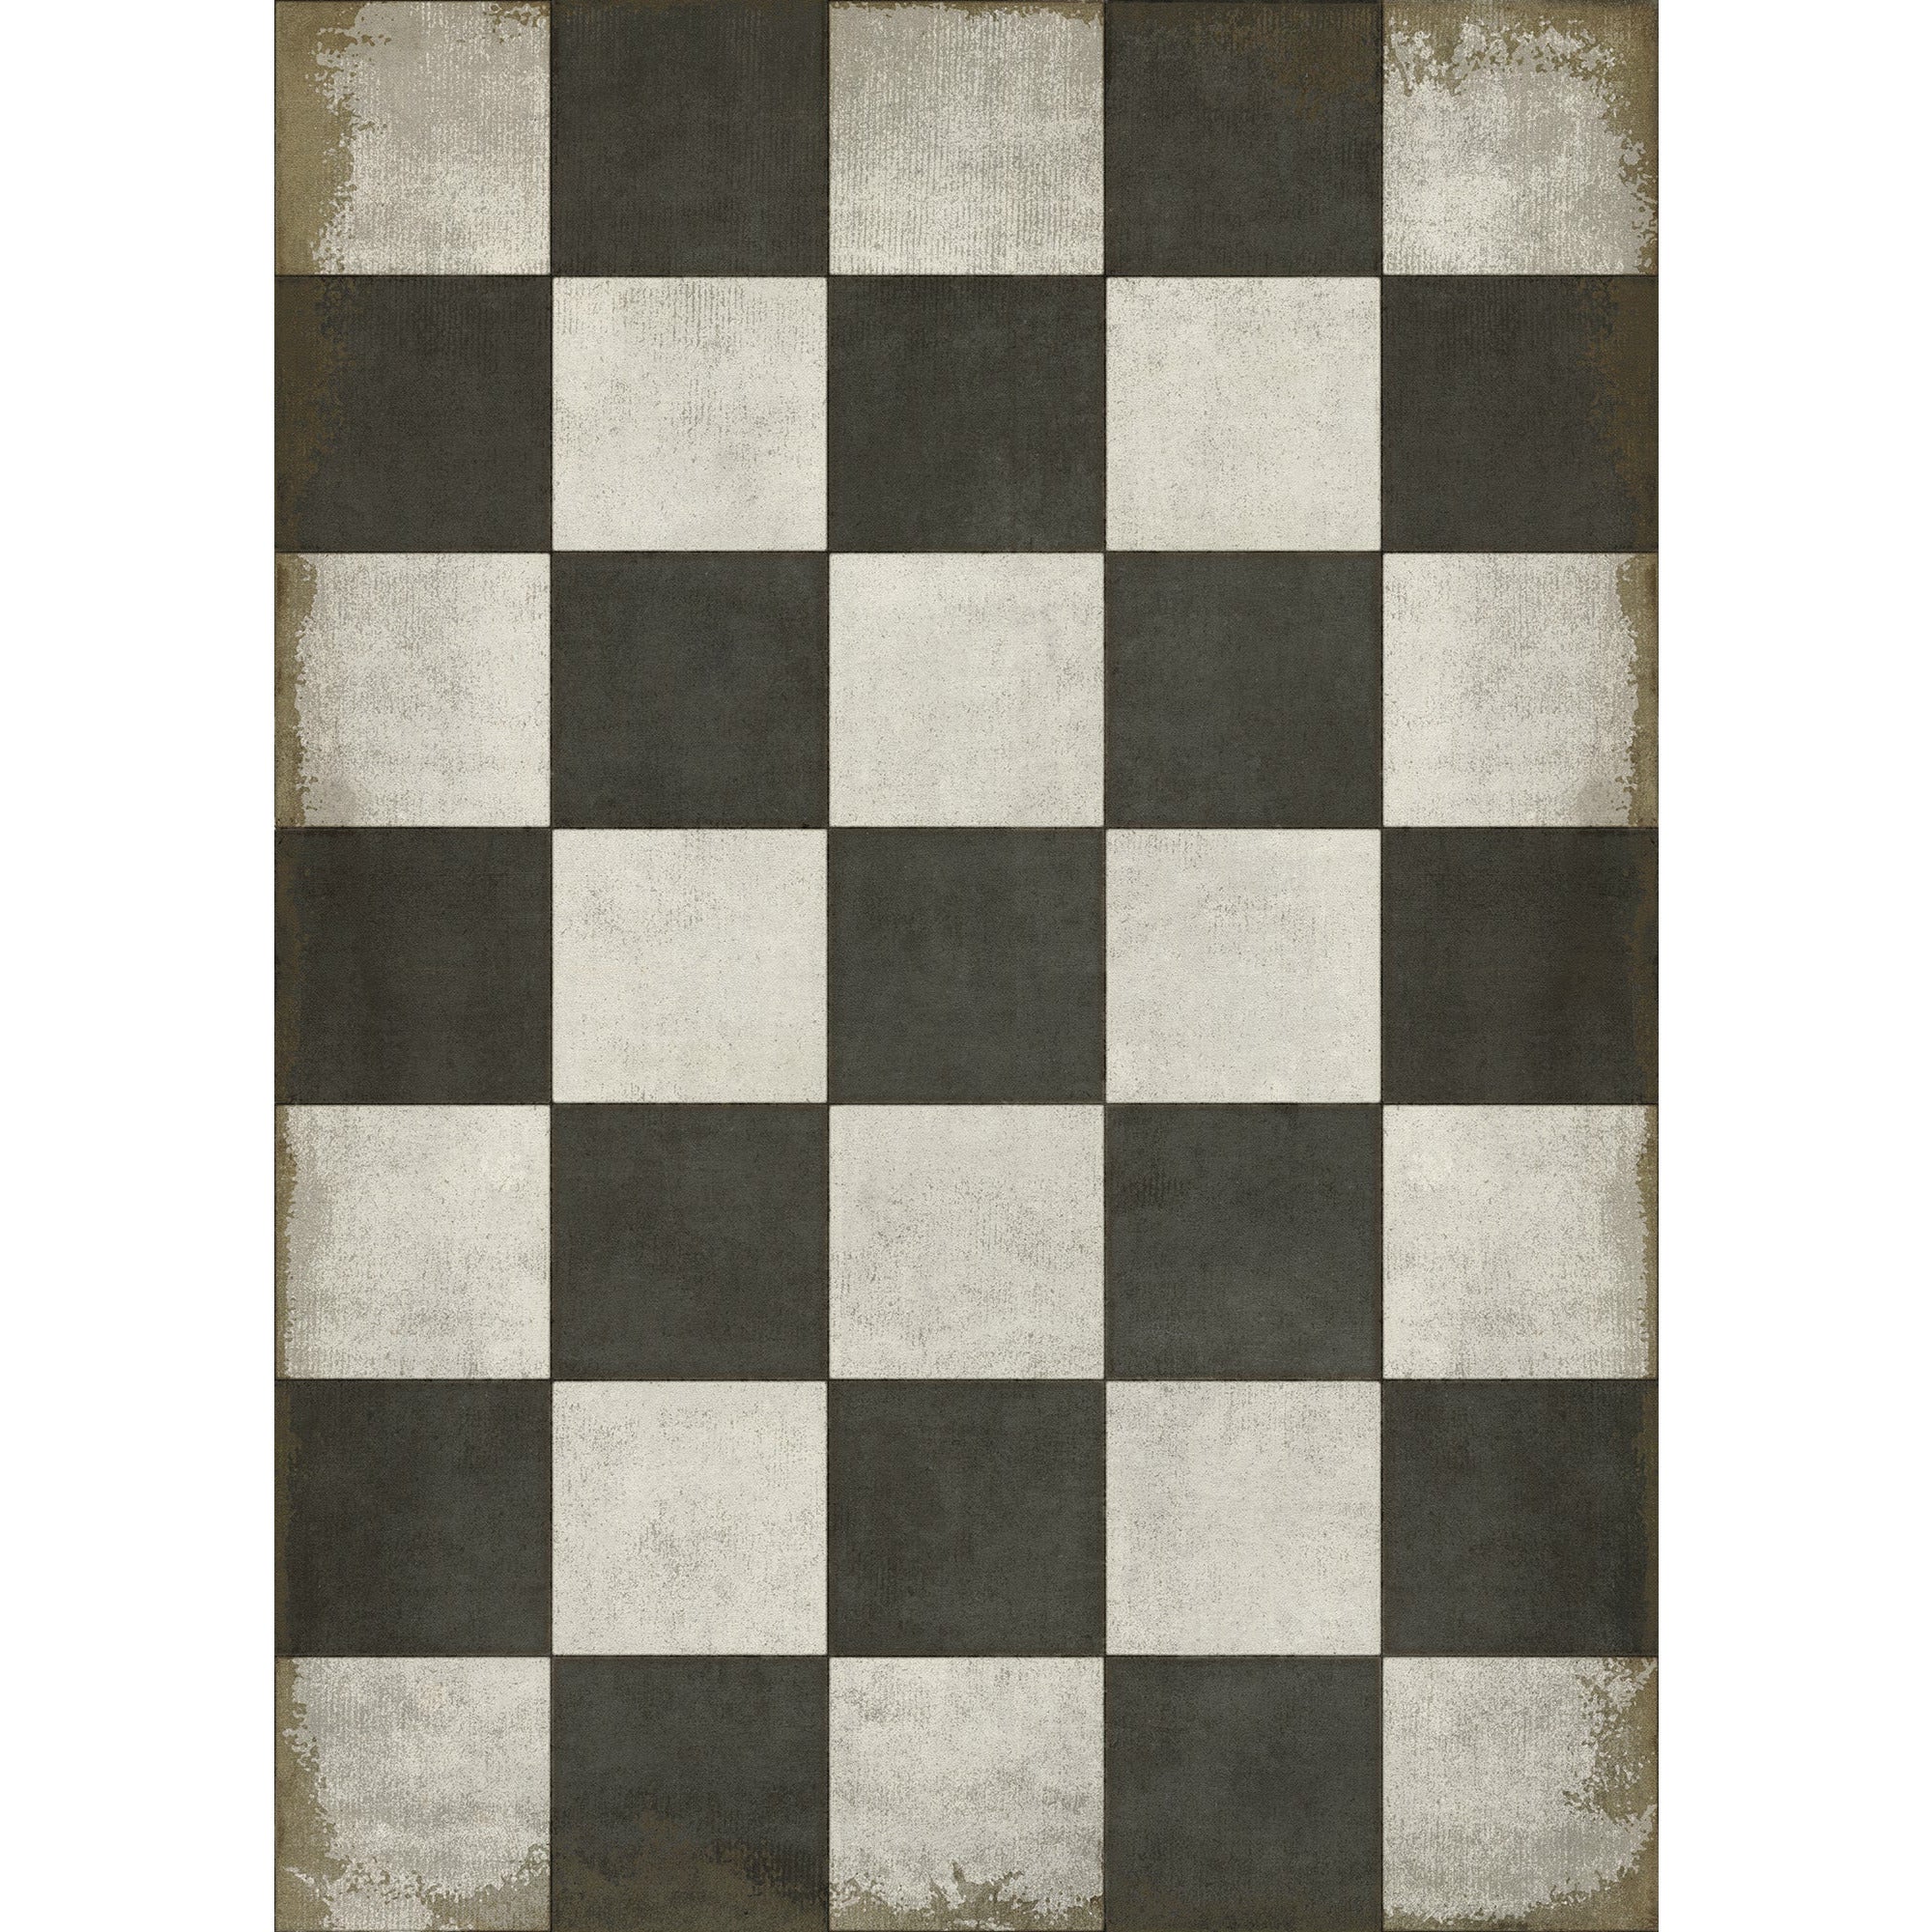 Pattern 07 Checkered Past Vinyl Floor Cloth